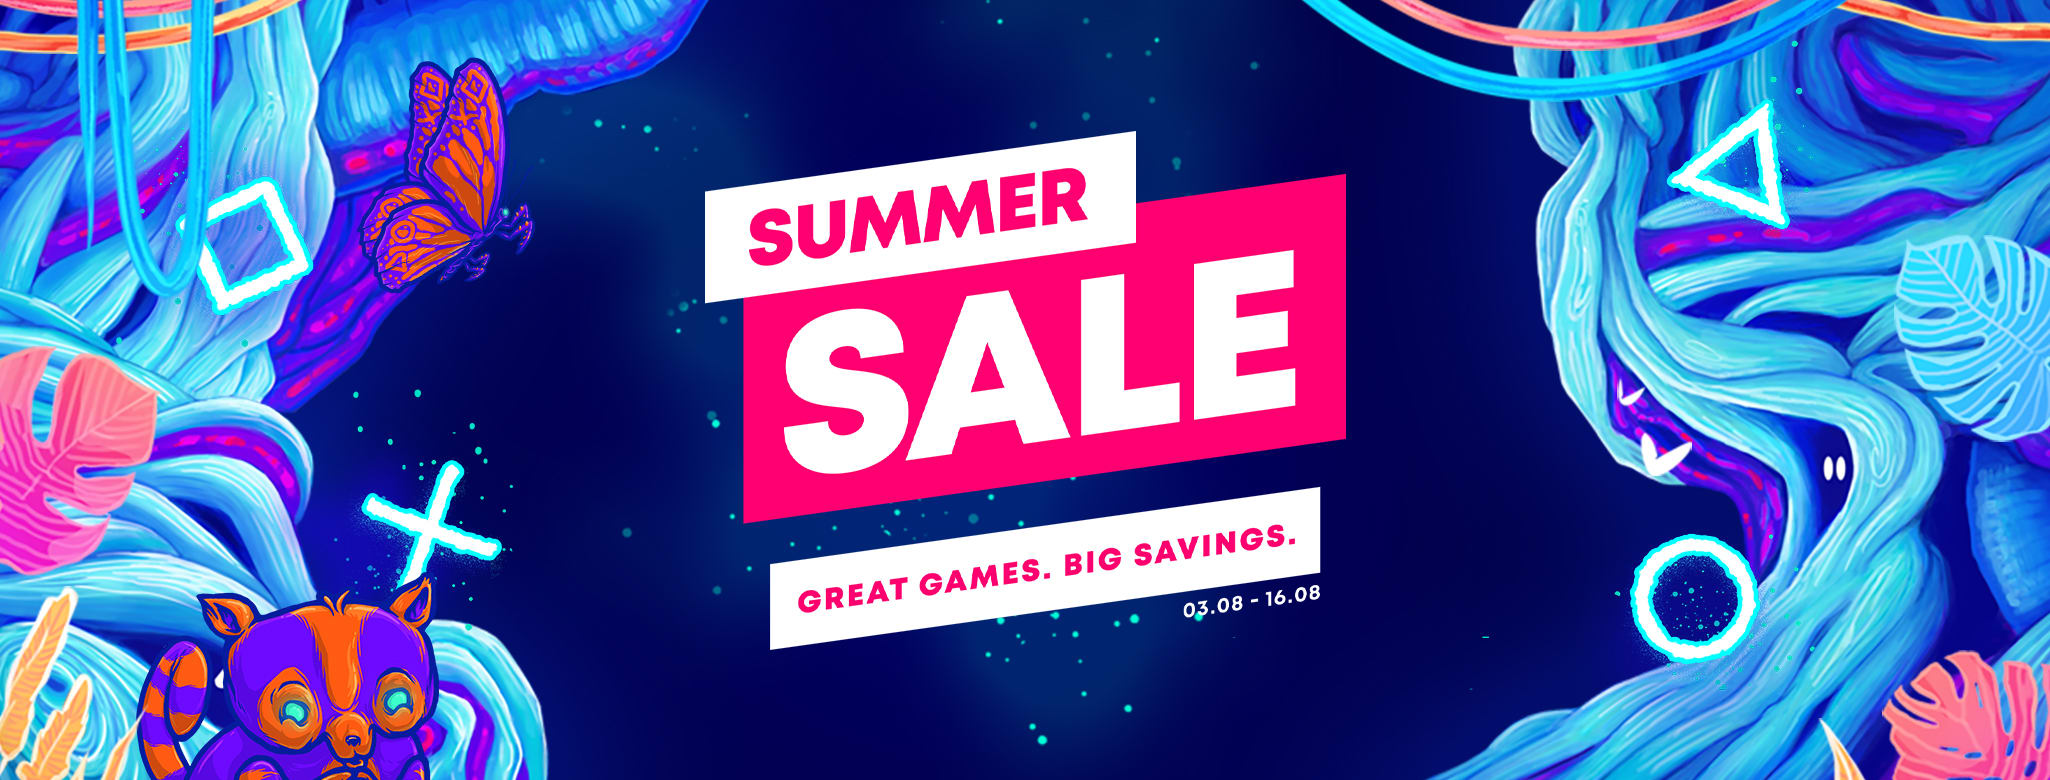 playstation 2022 summer sale